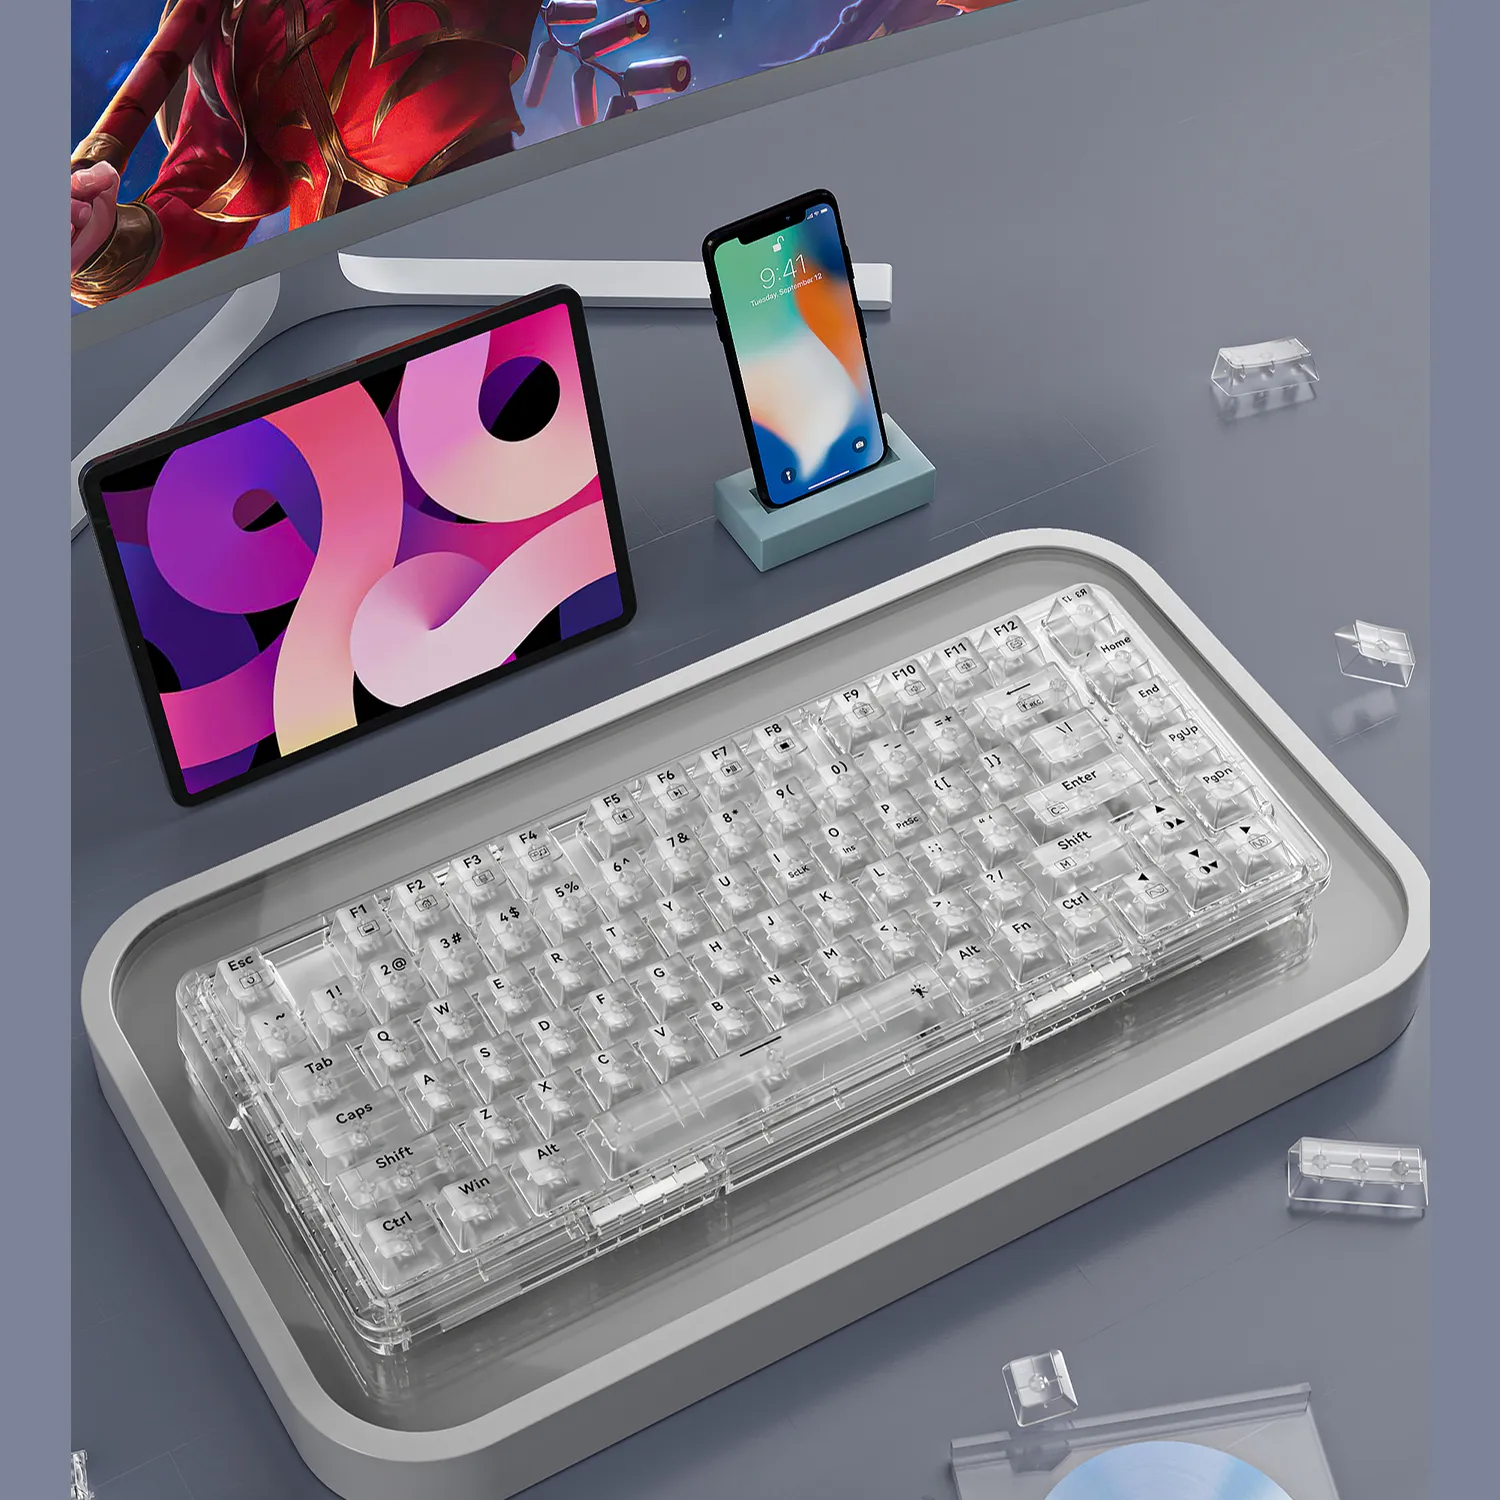 60% 75% Keyboard 82 Keys Hot Swappable DIY USB Wired Wireless BT Mini RGB Gaming Red Blue Switch Mechanical Keyboard Set